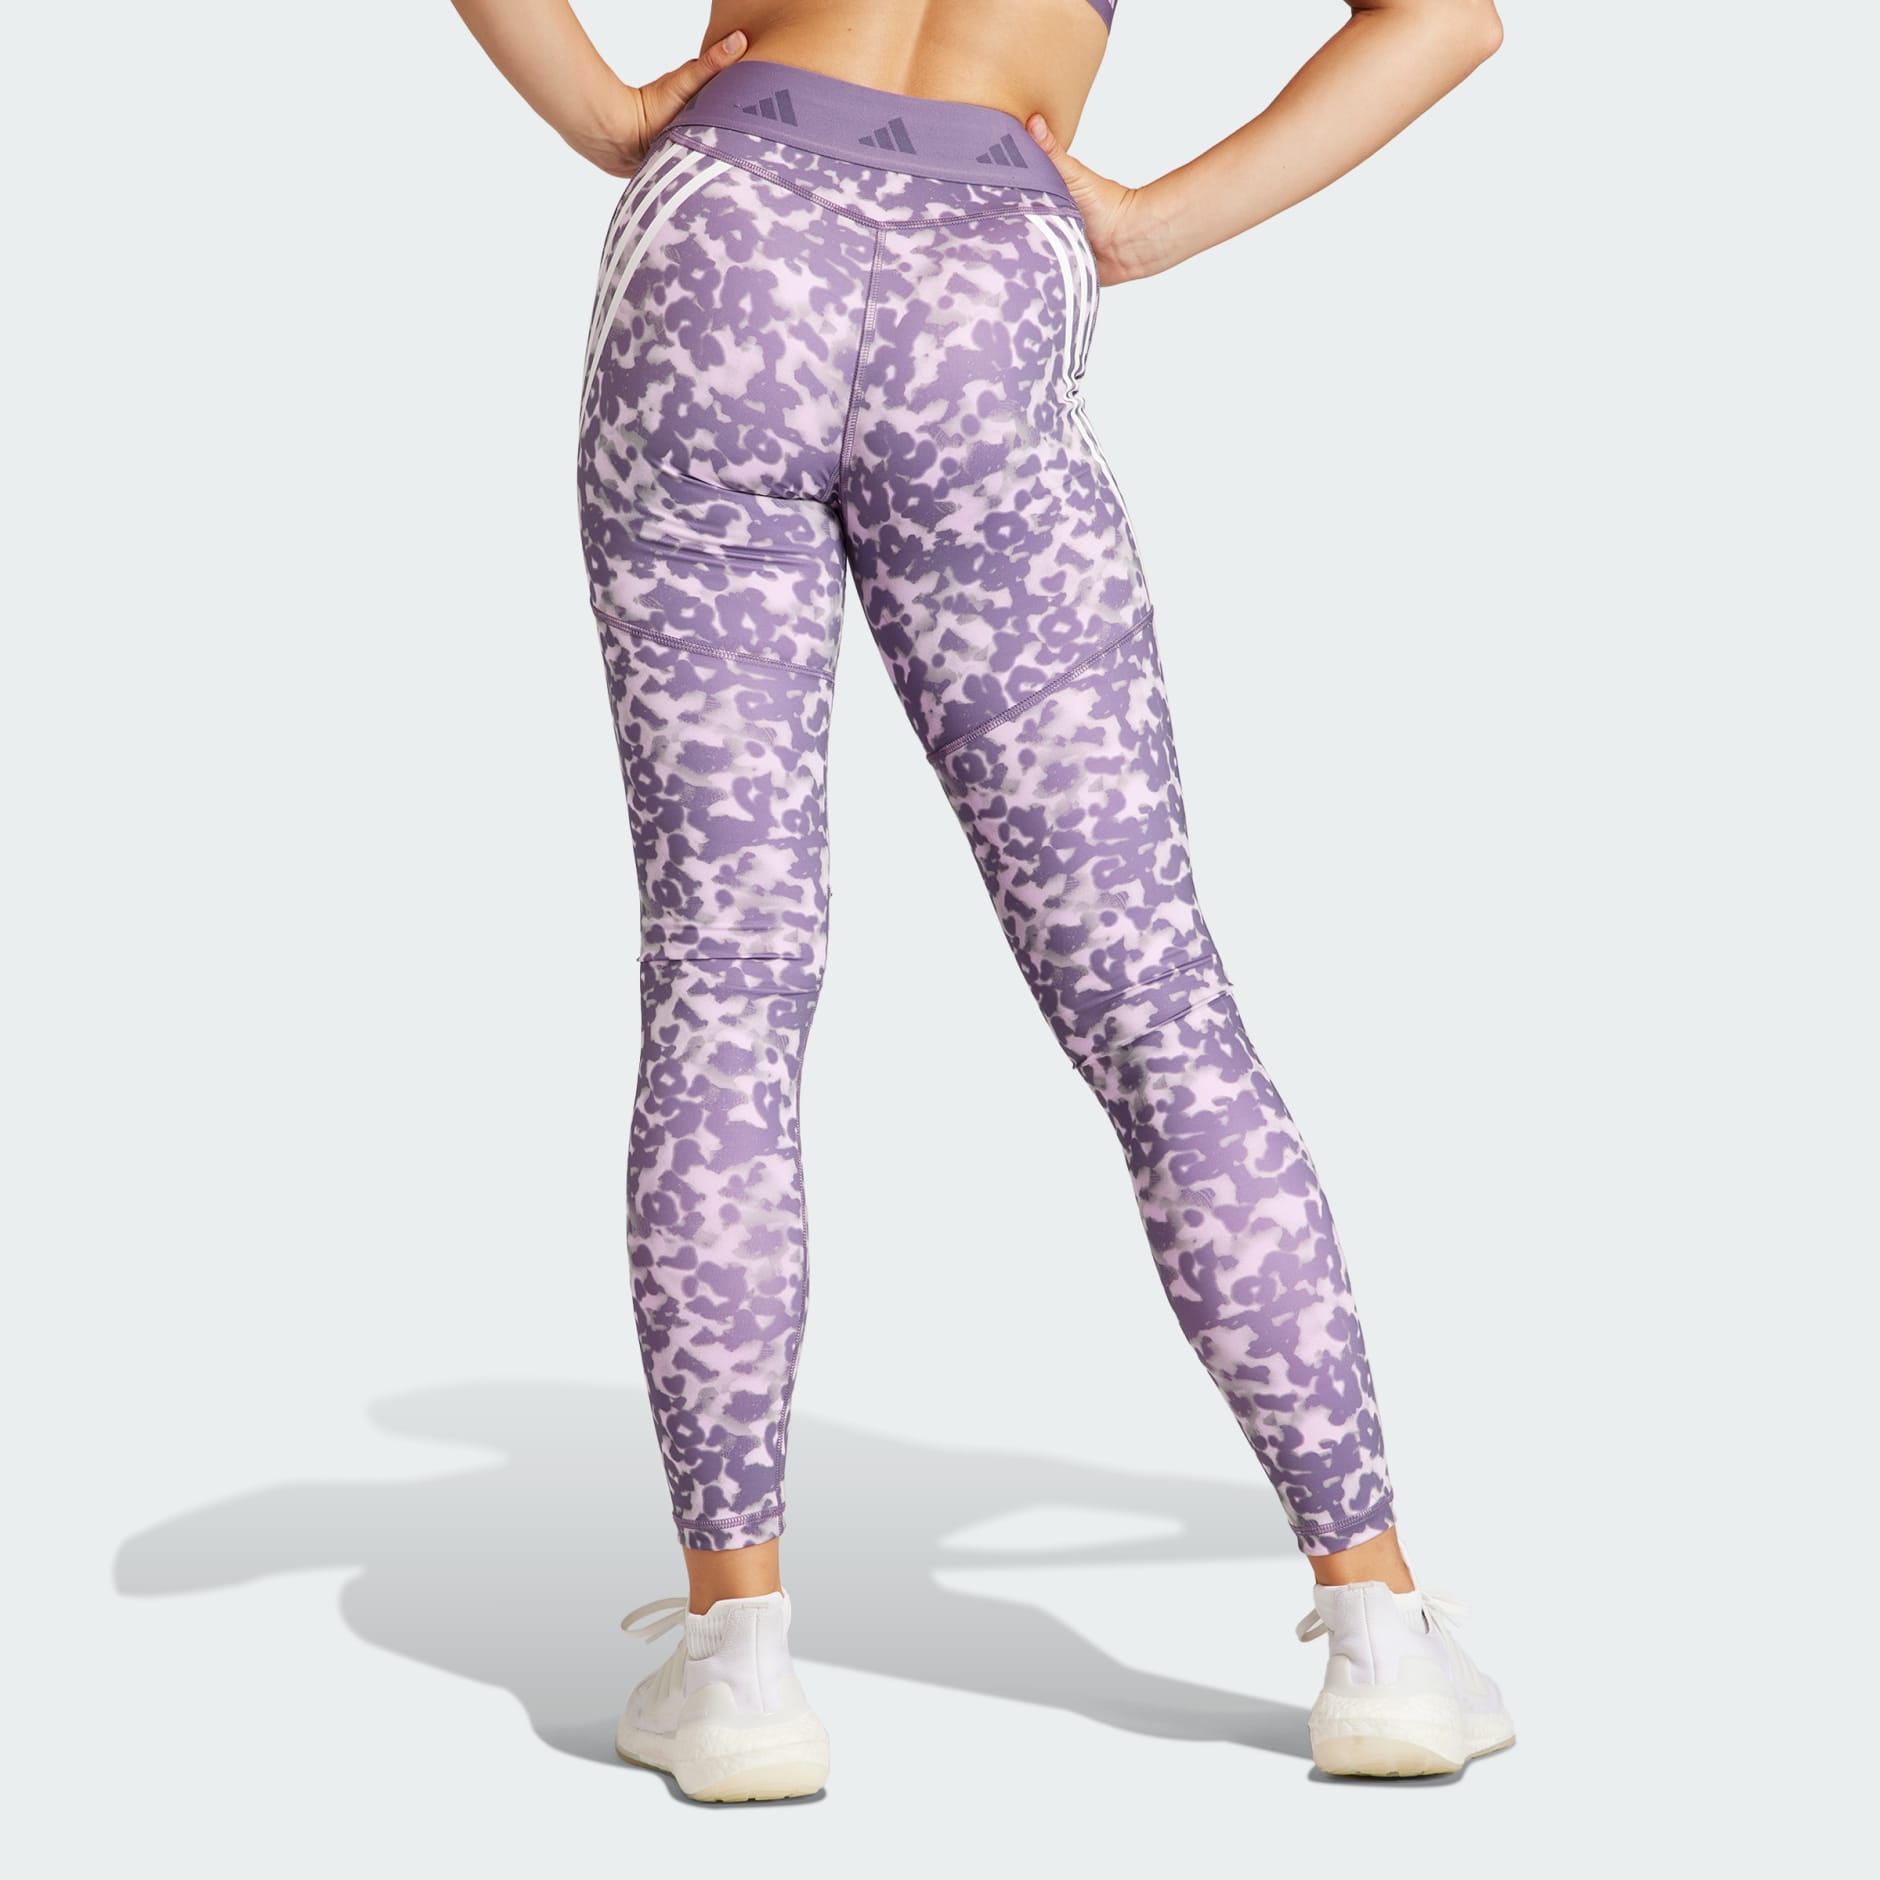 White Camo Leggings, Yoga Pants, Sport Pants, Fitness – Edgefitness_apparel